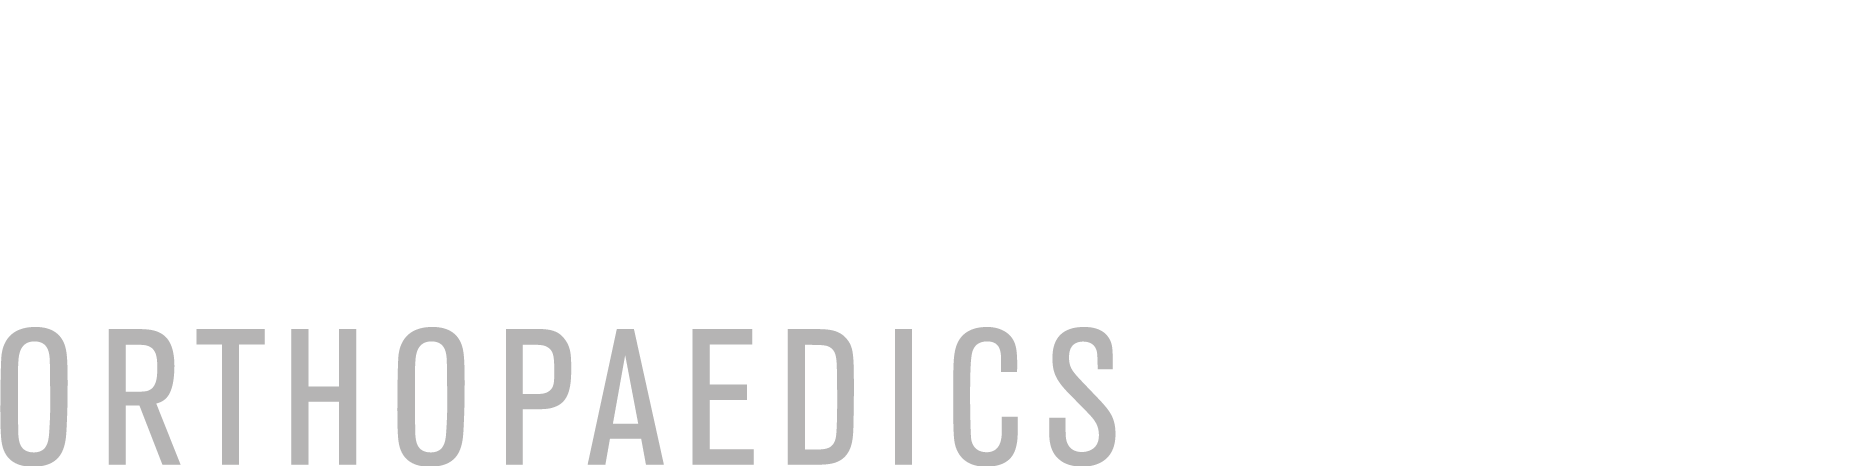 Petterwood Orthopaedics logo